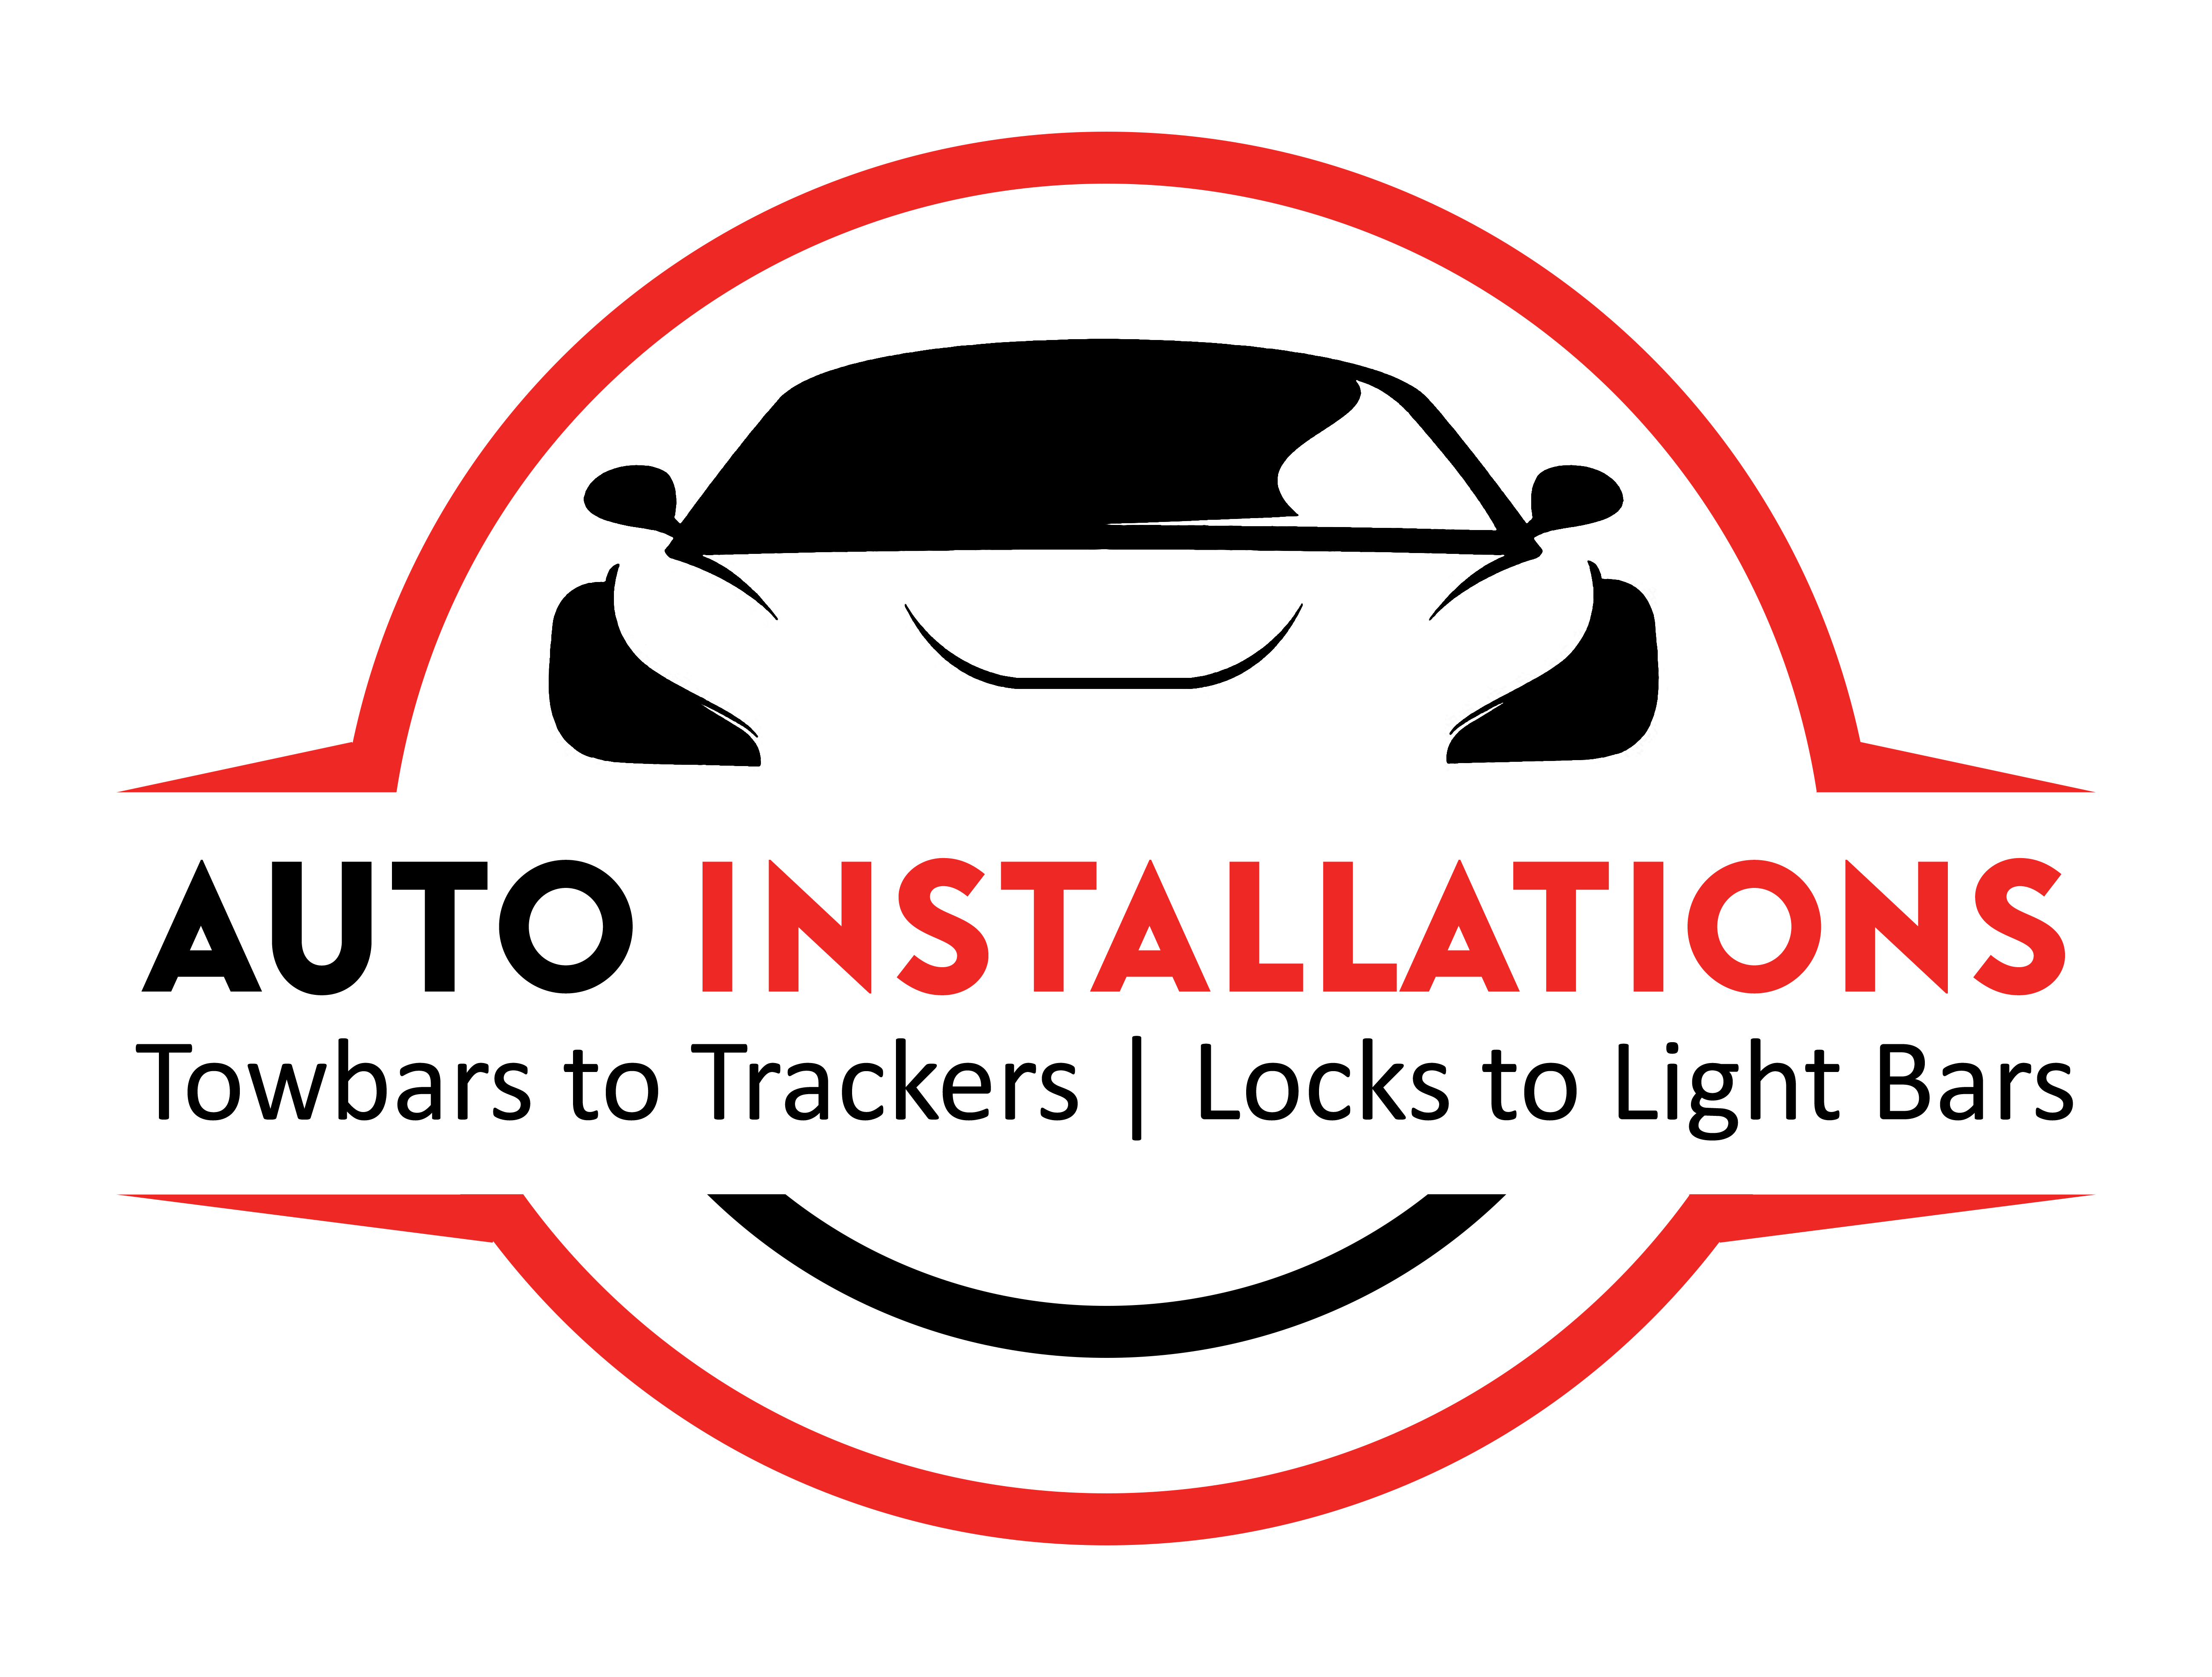 Auto Installation Services